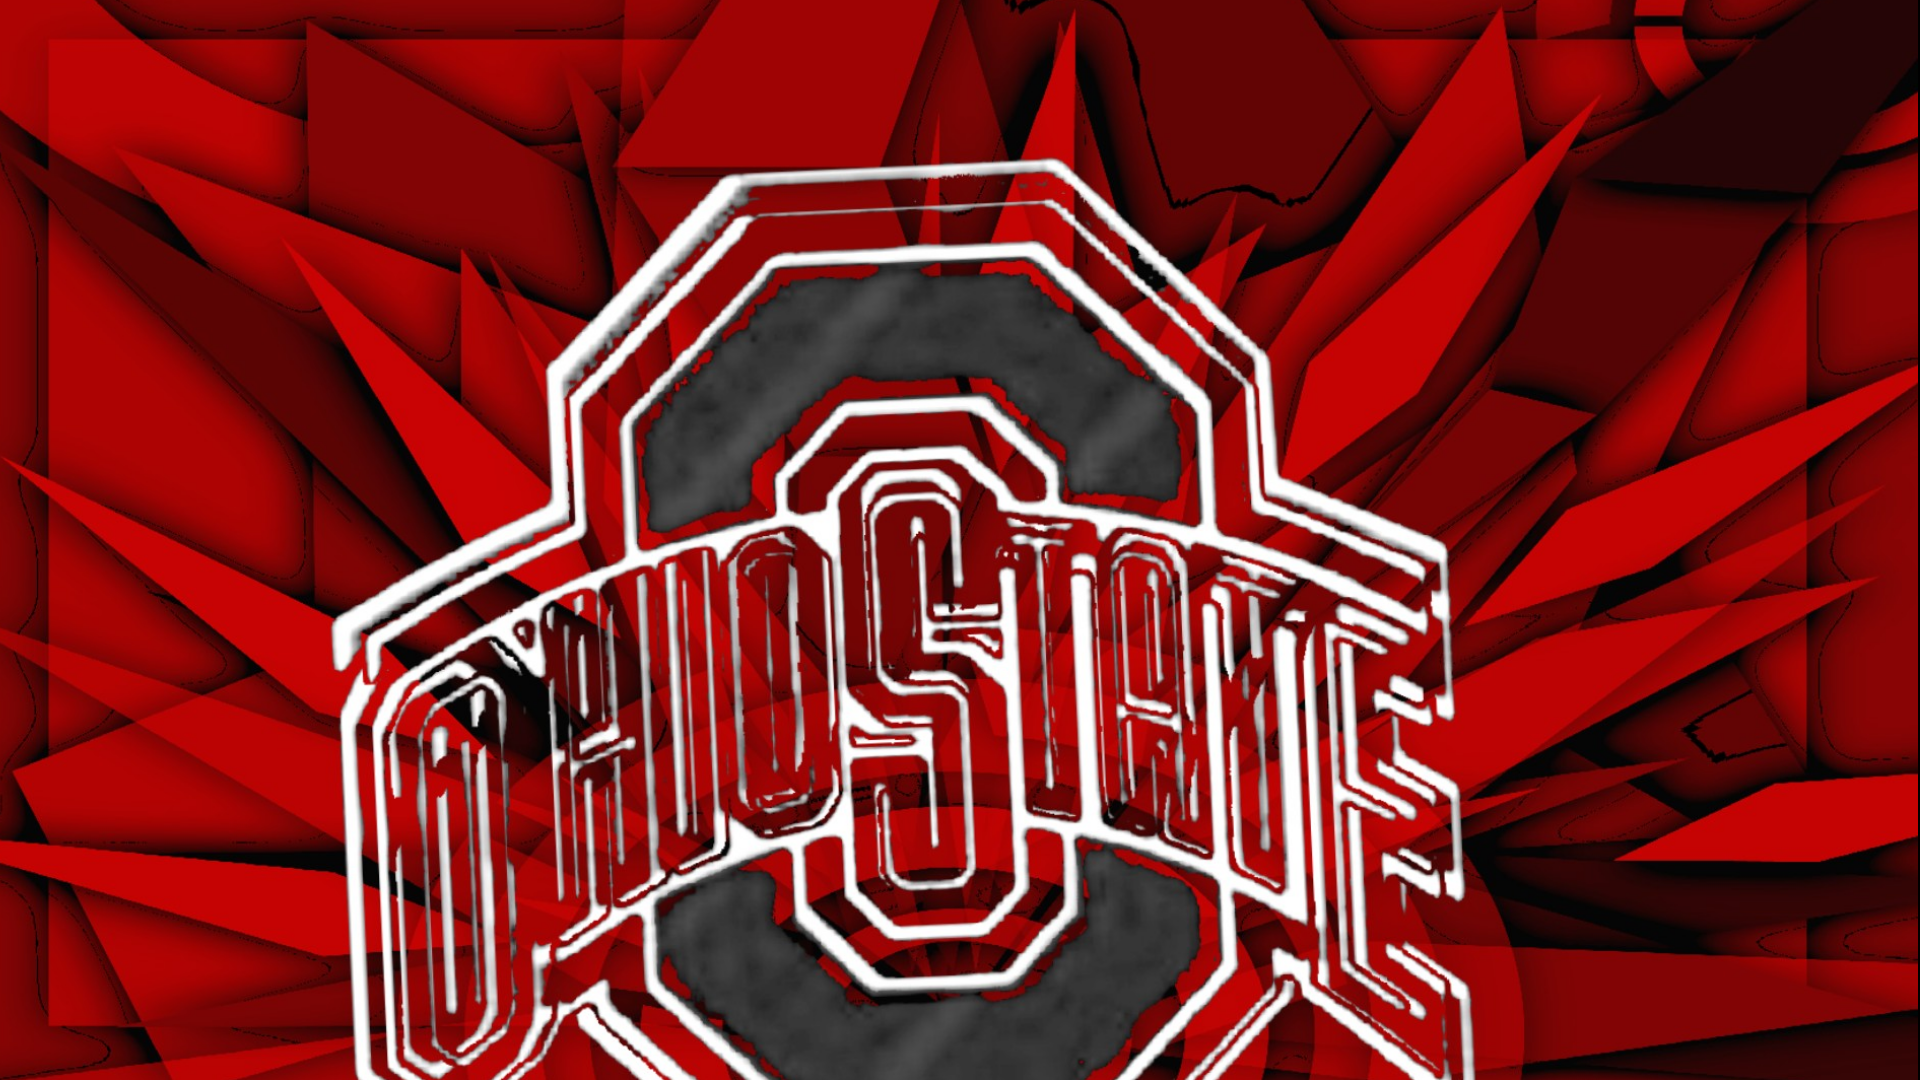 OHIO STATE GRAY BLOCK O - Ohio State Buckeyes Wallpaper (30547927 ...